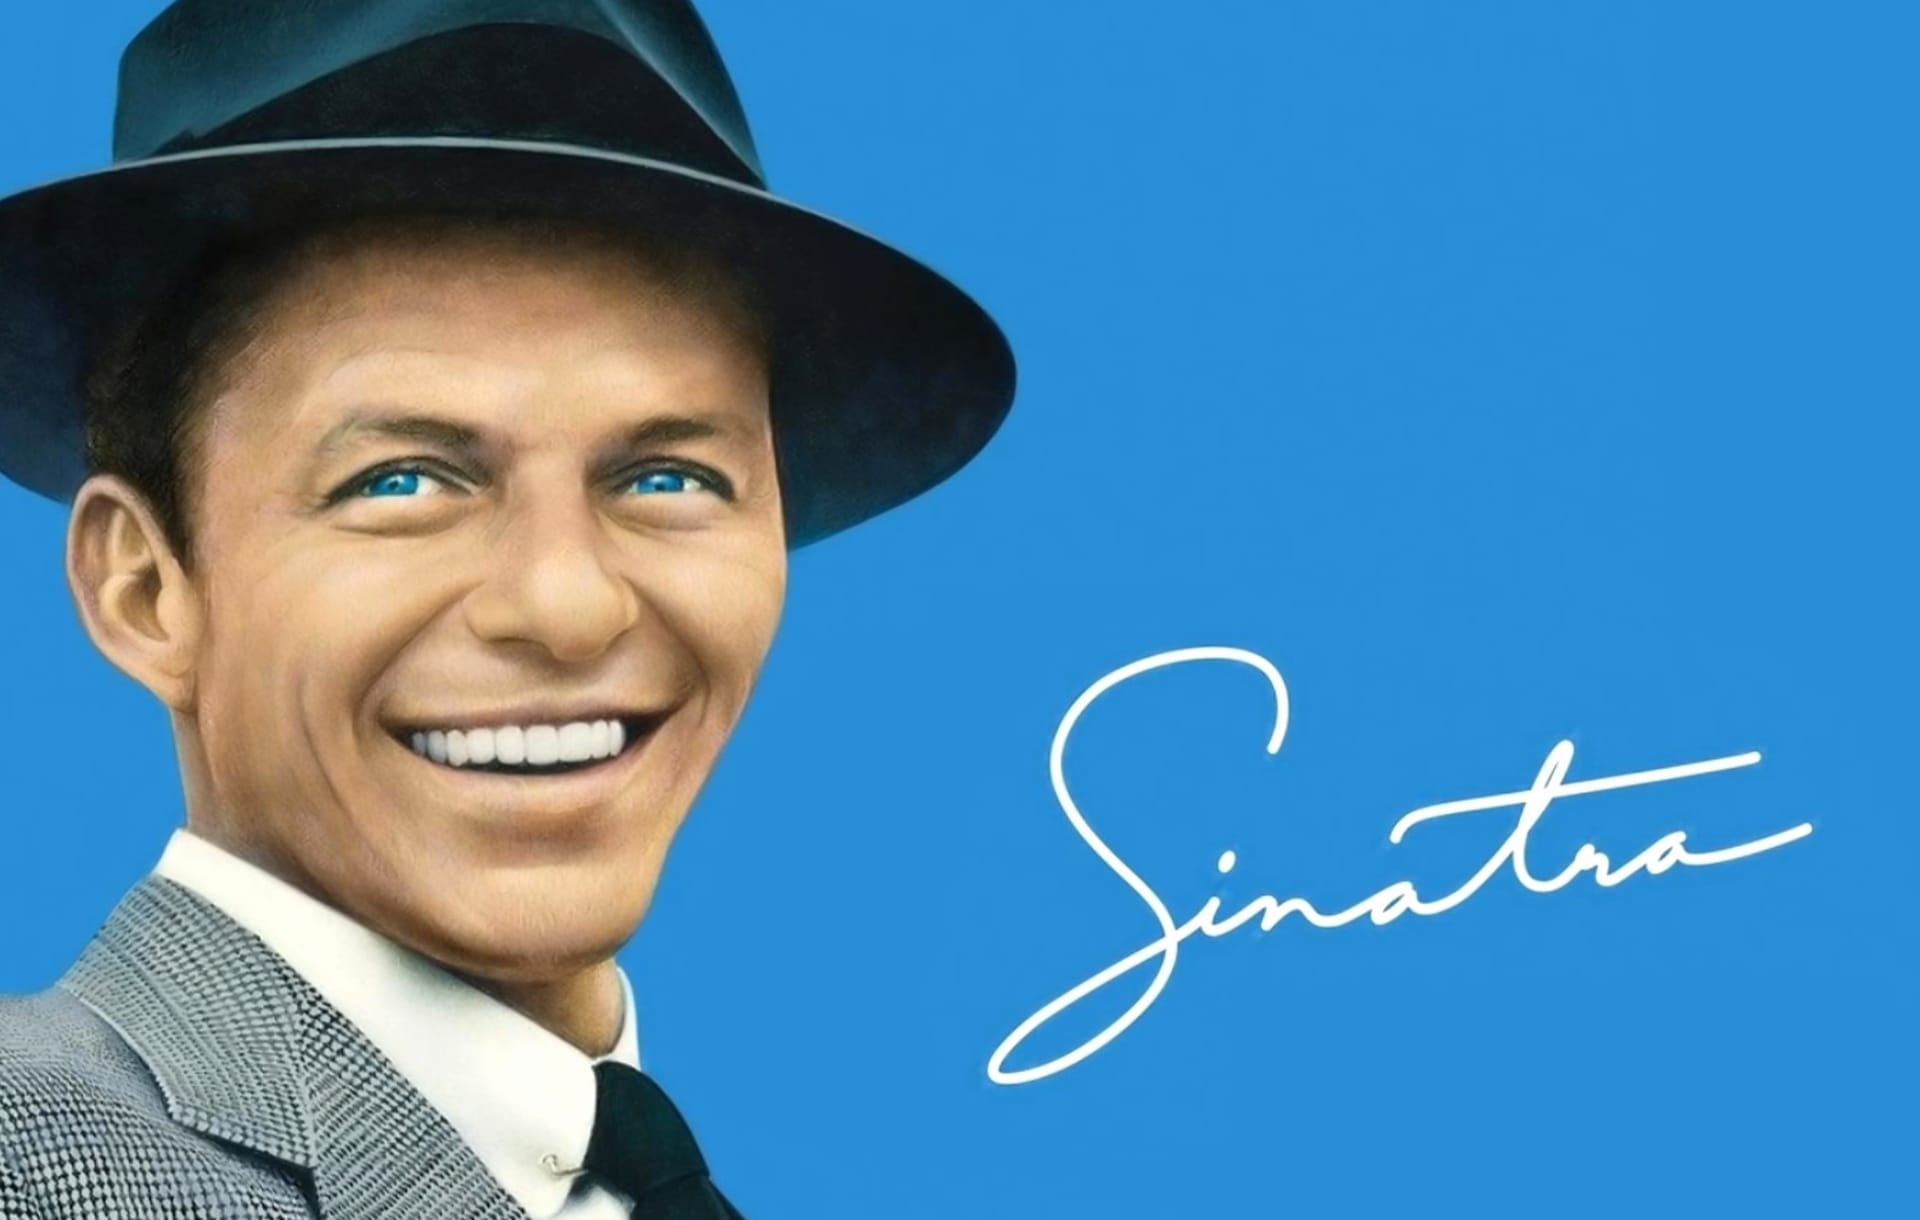 Frank Sinatra at 2048 x 2048 iPad size wallpapers HD quality